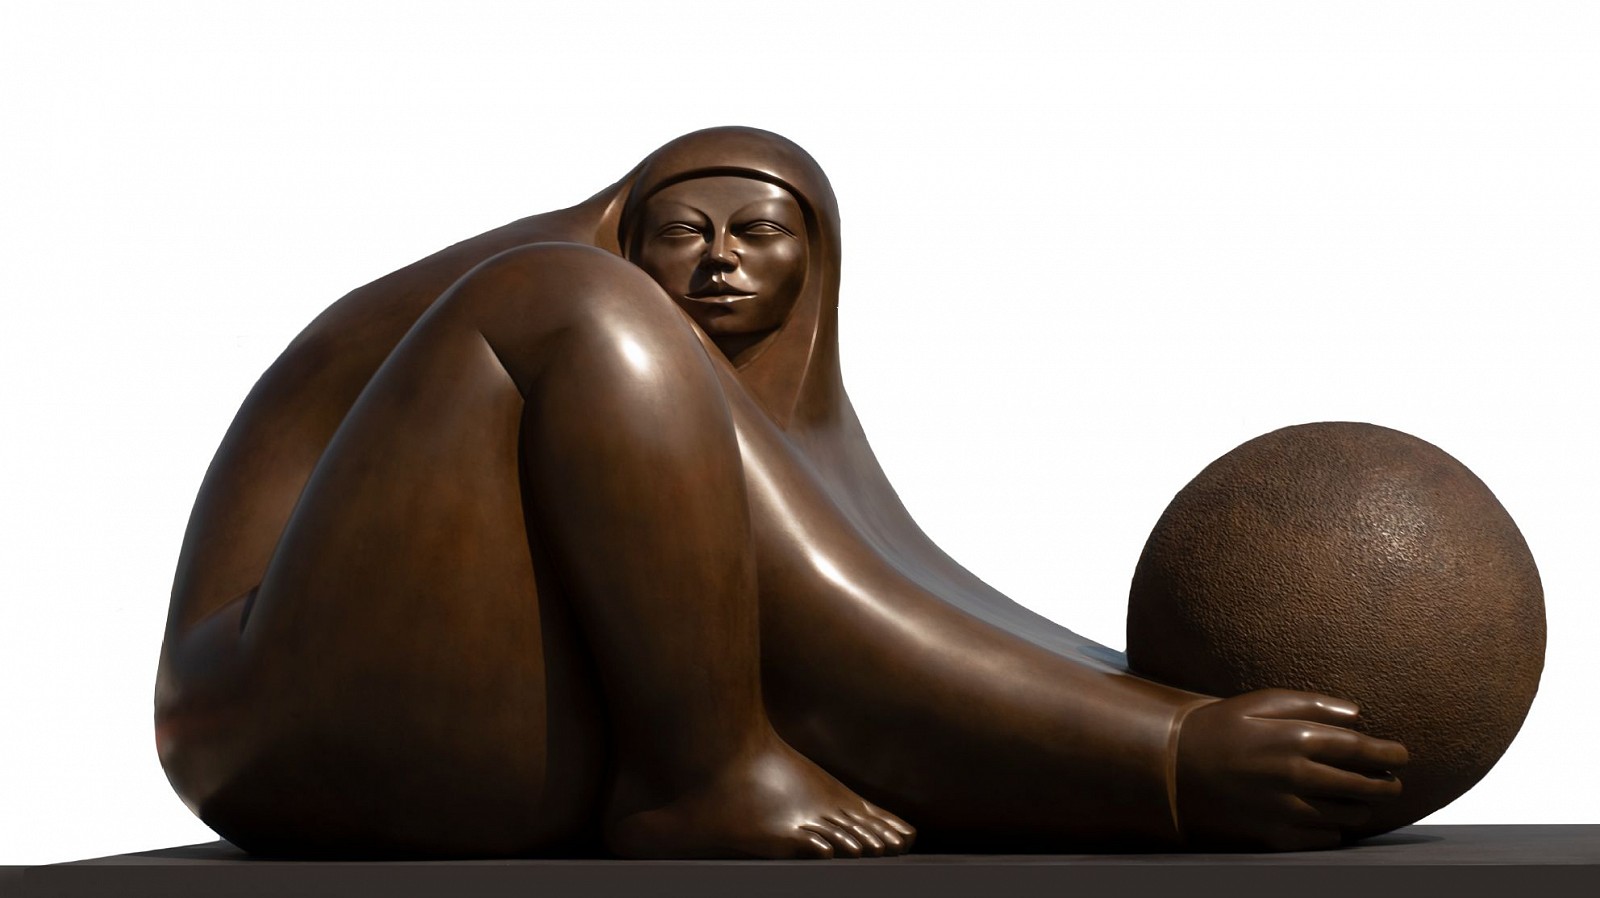 Jorge Jiménez Deredia, Arrullo
Bronze Sculpture, 51 1/8 x 94 3/8 x 57 3/8 in.